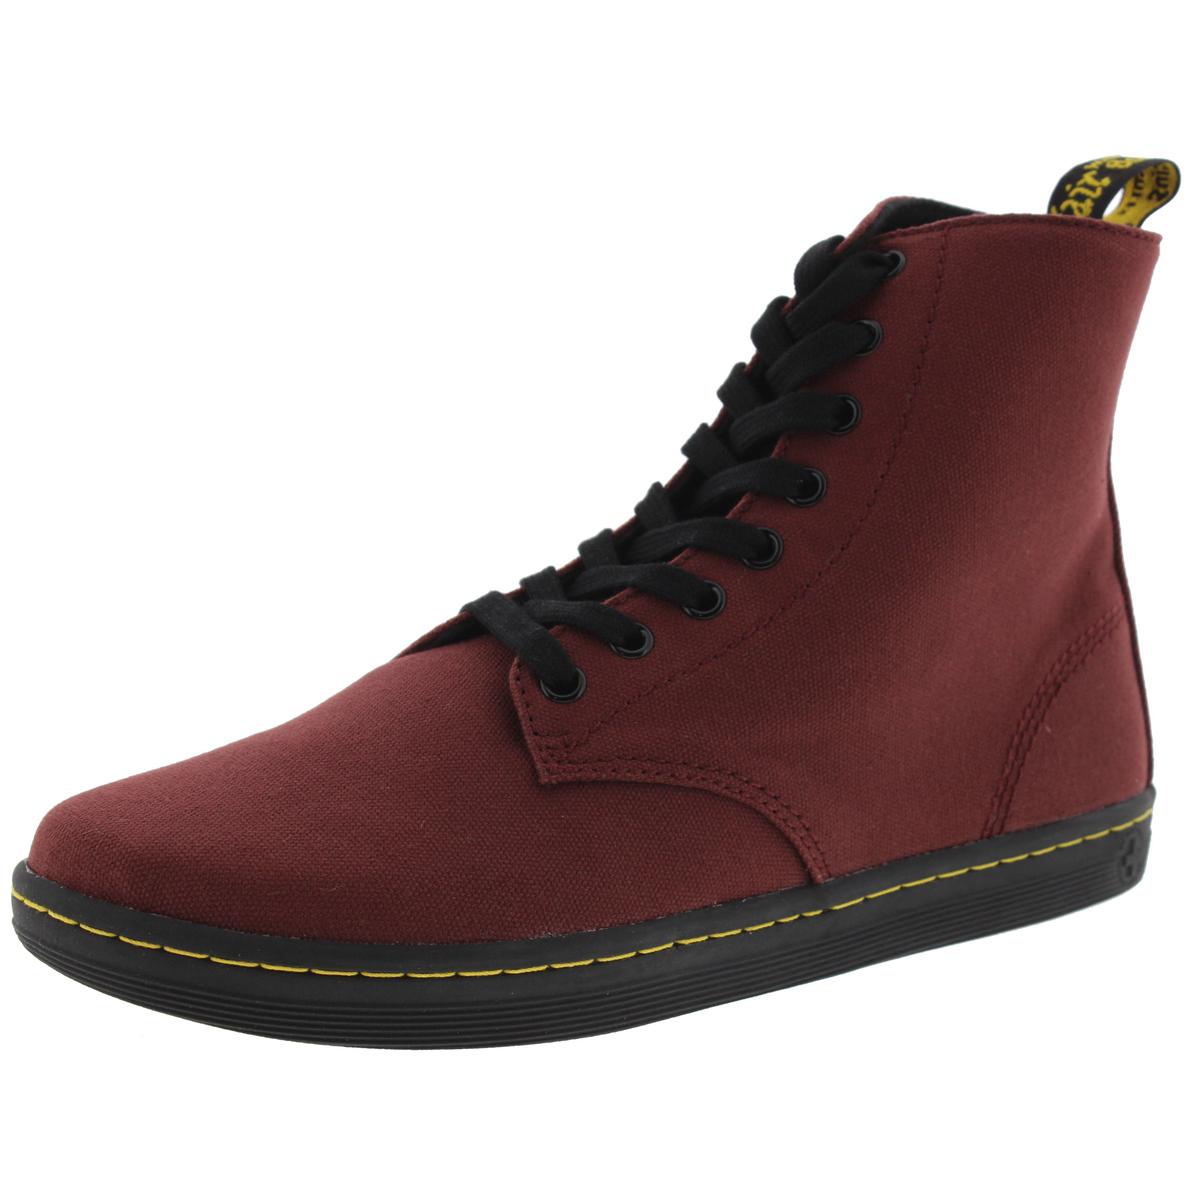 Dr. Martens 9414 Mens Alfie Canvas Lace Up Chukka Boots Shoes BHFO | eBay